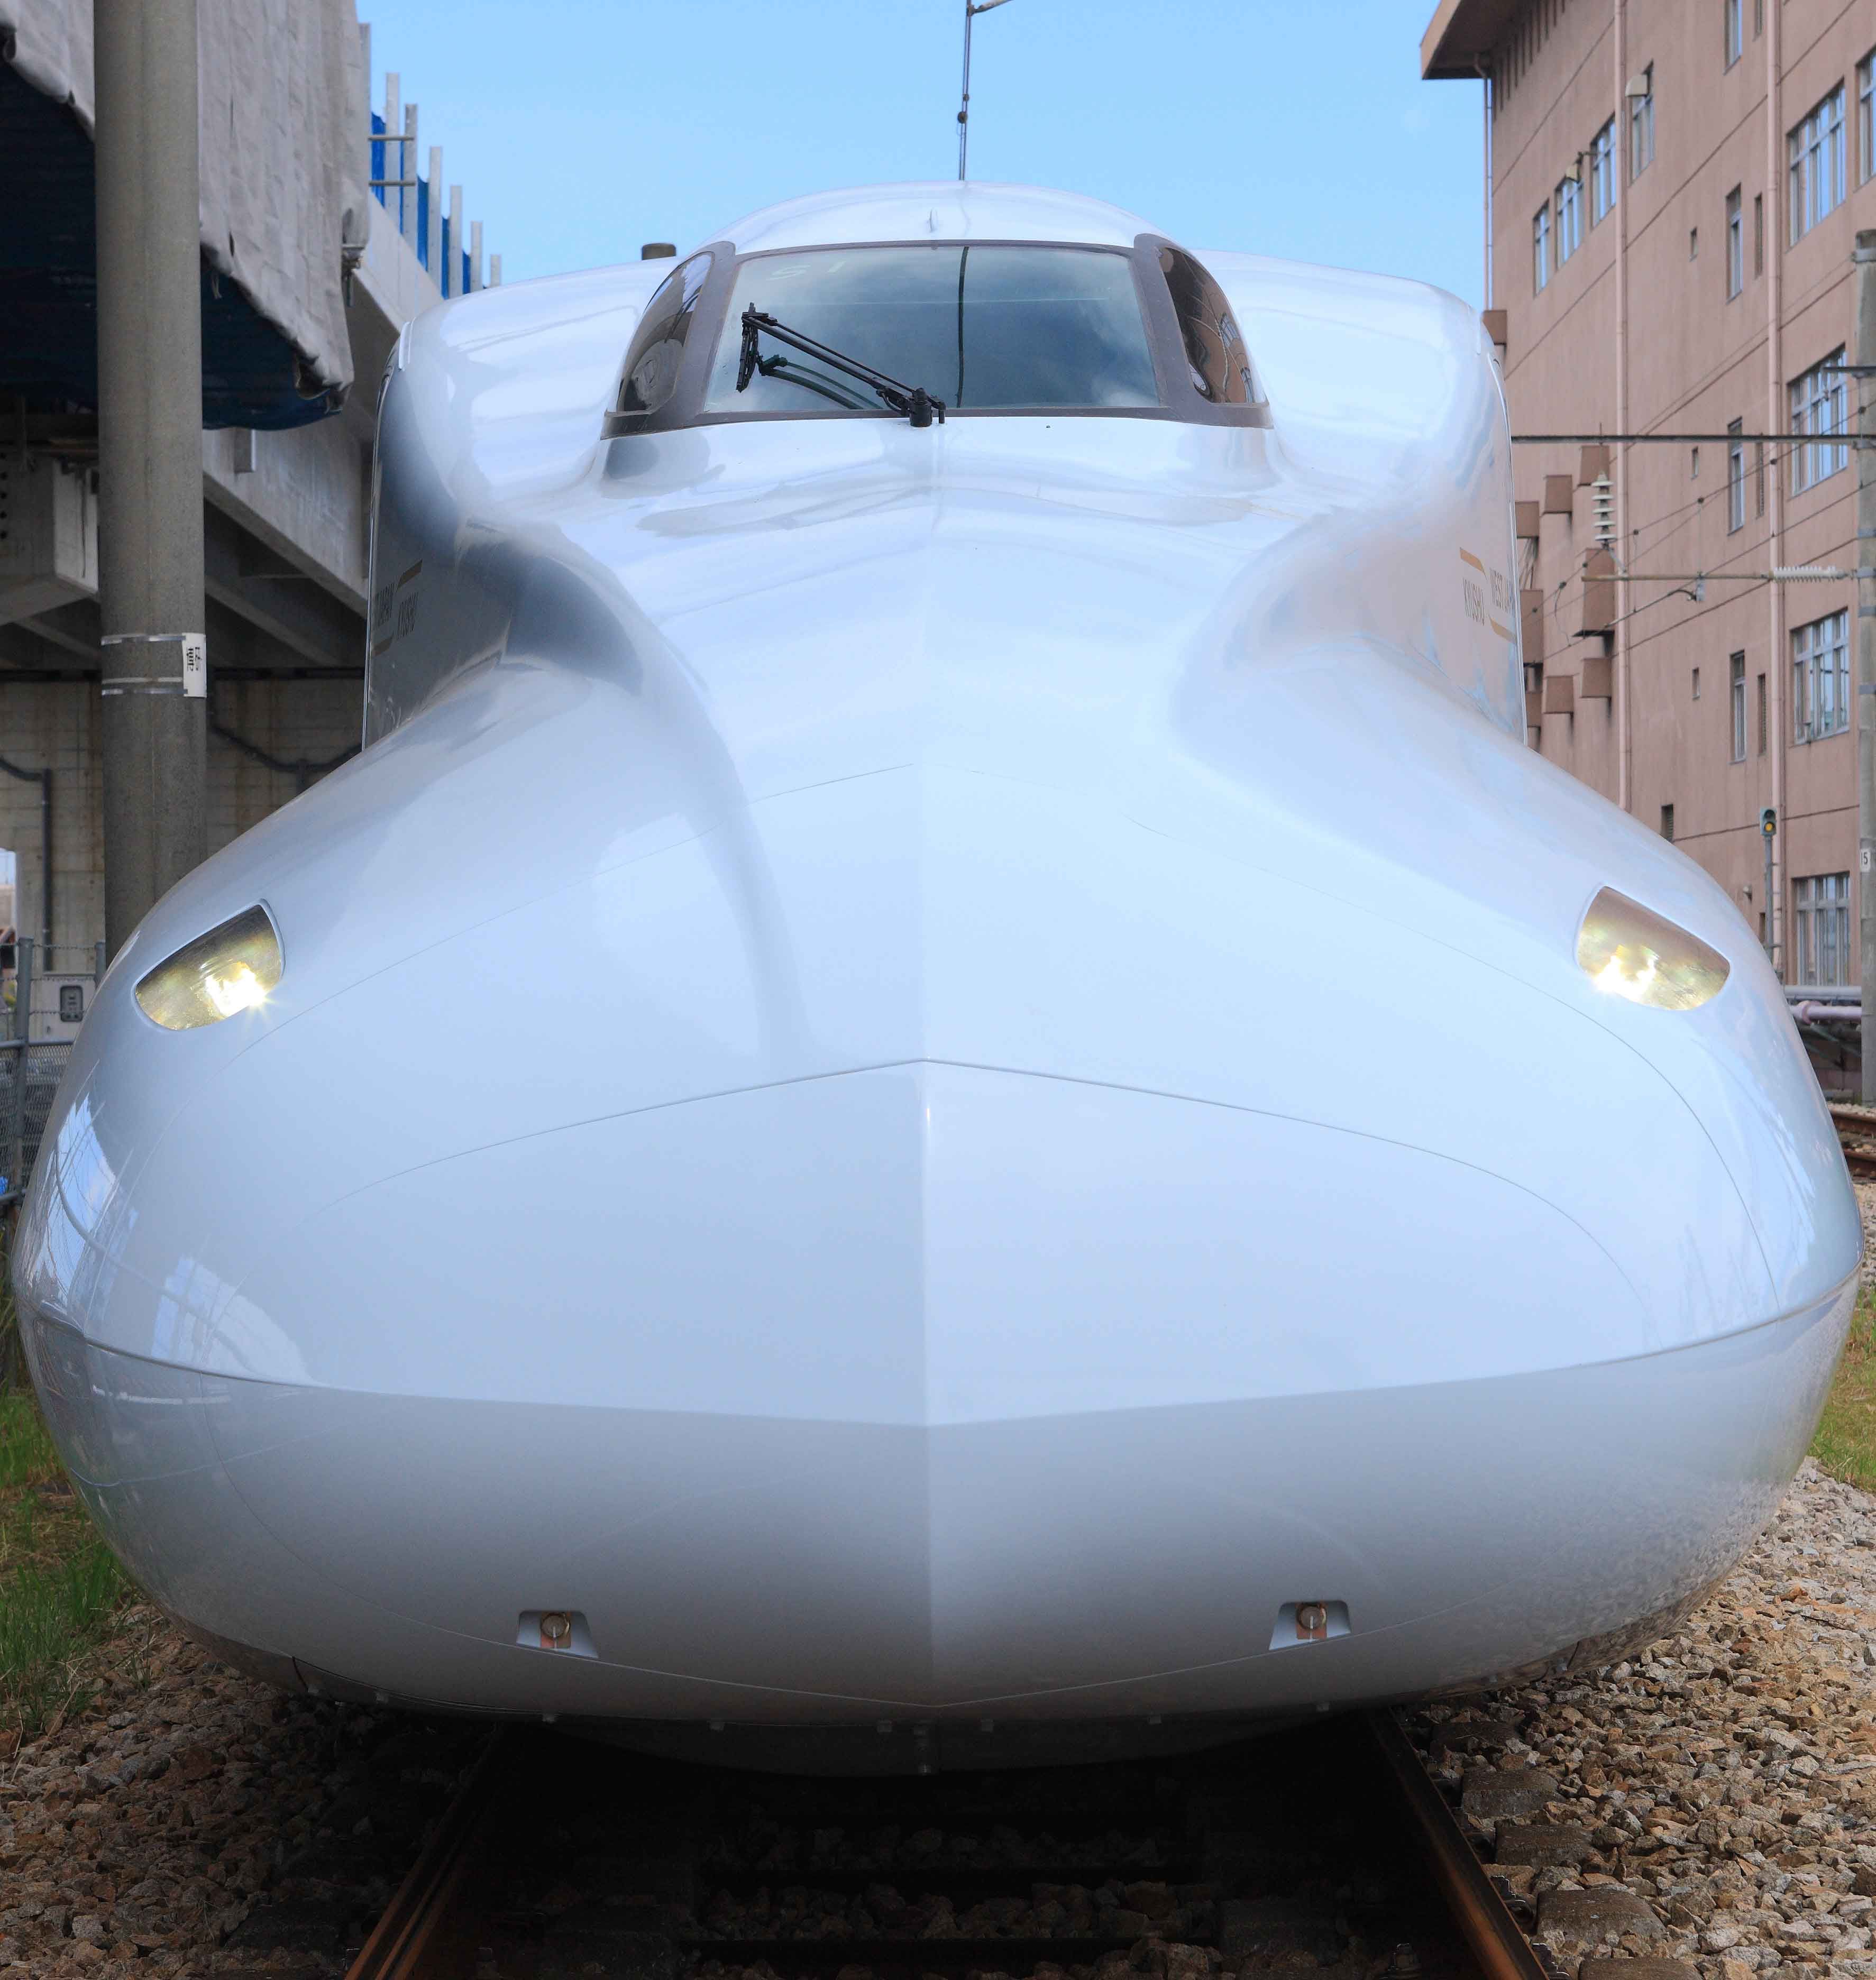 The N700 Series Bullet Train For The Sanyo Kyushu Shinkansen Line. Japan, Japan Travel, HD Wallpaper